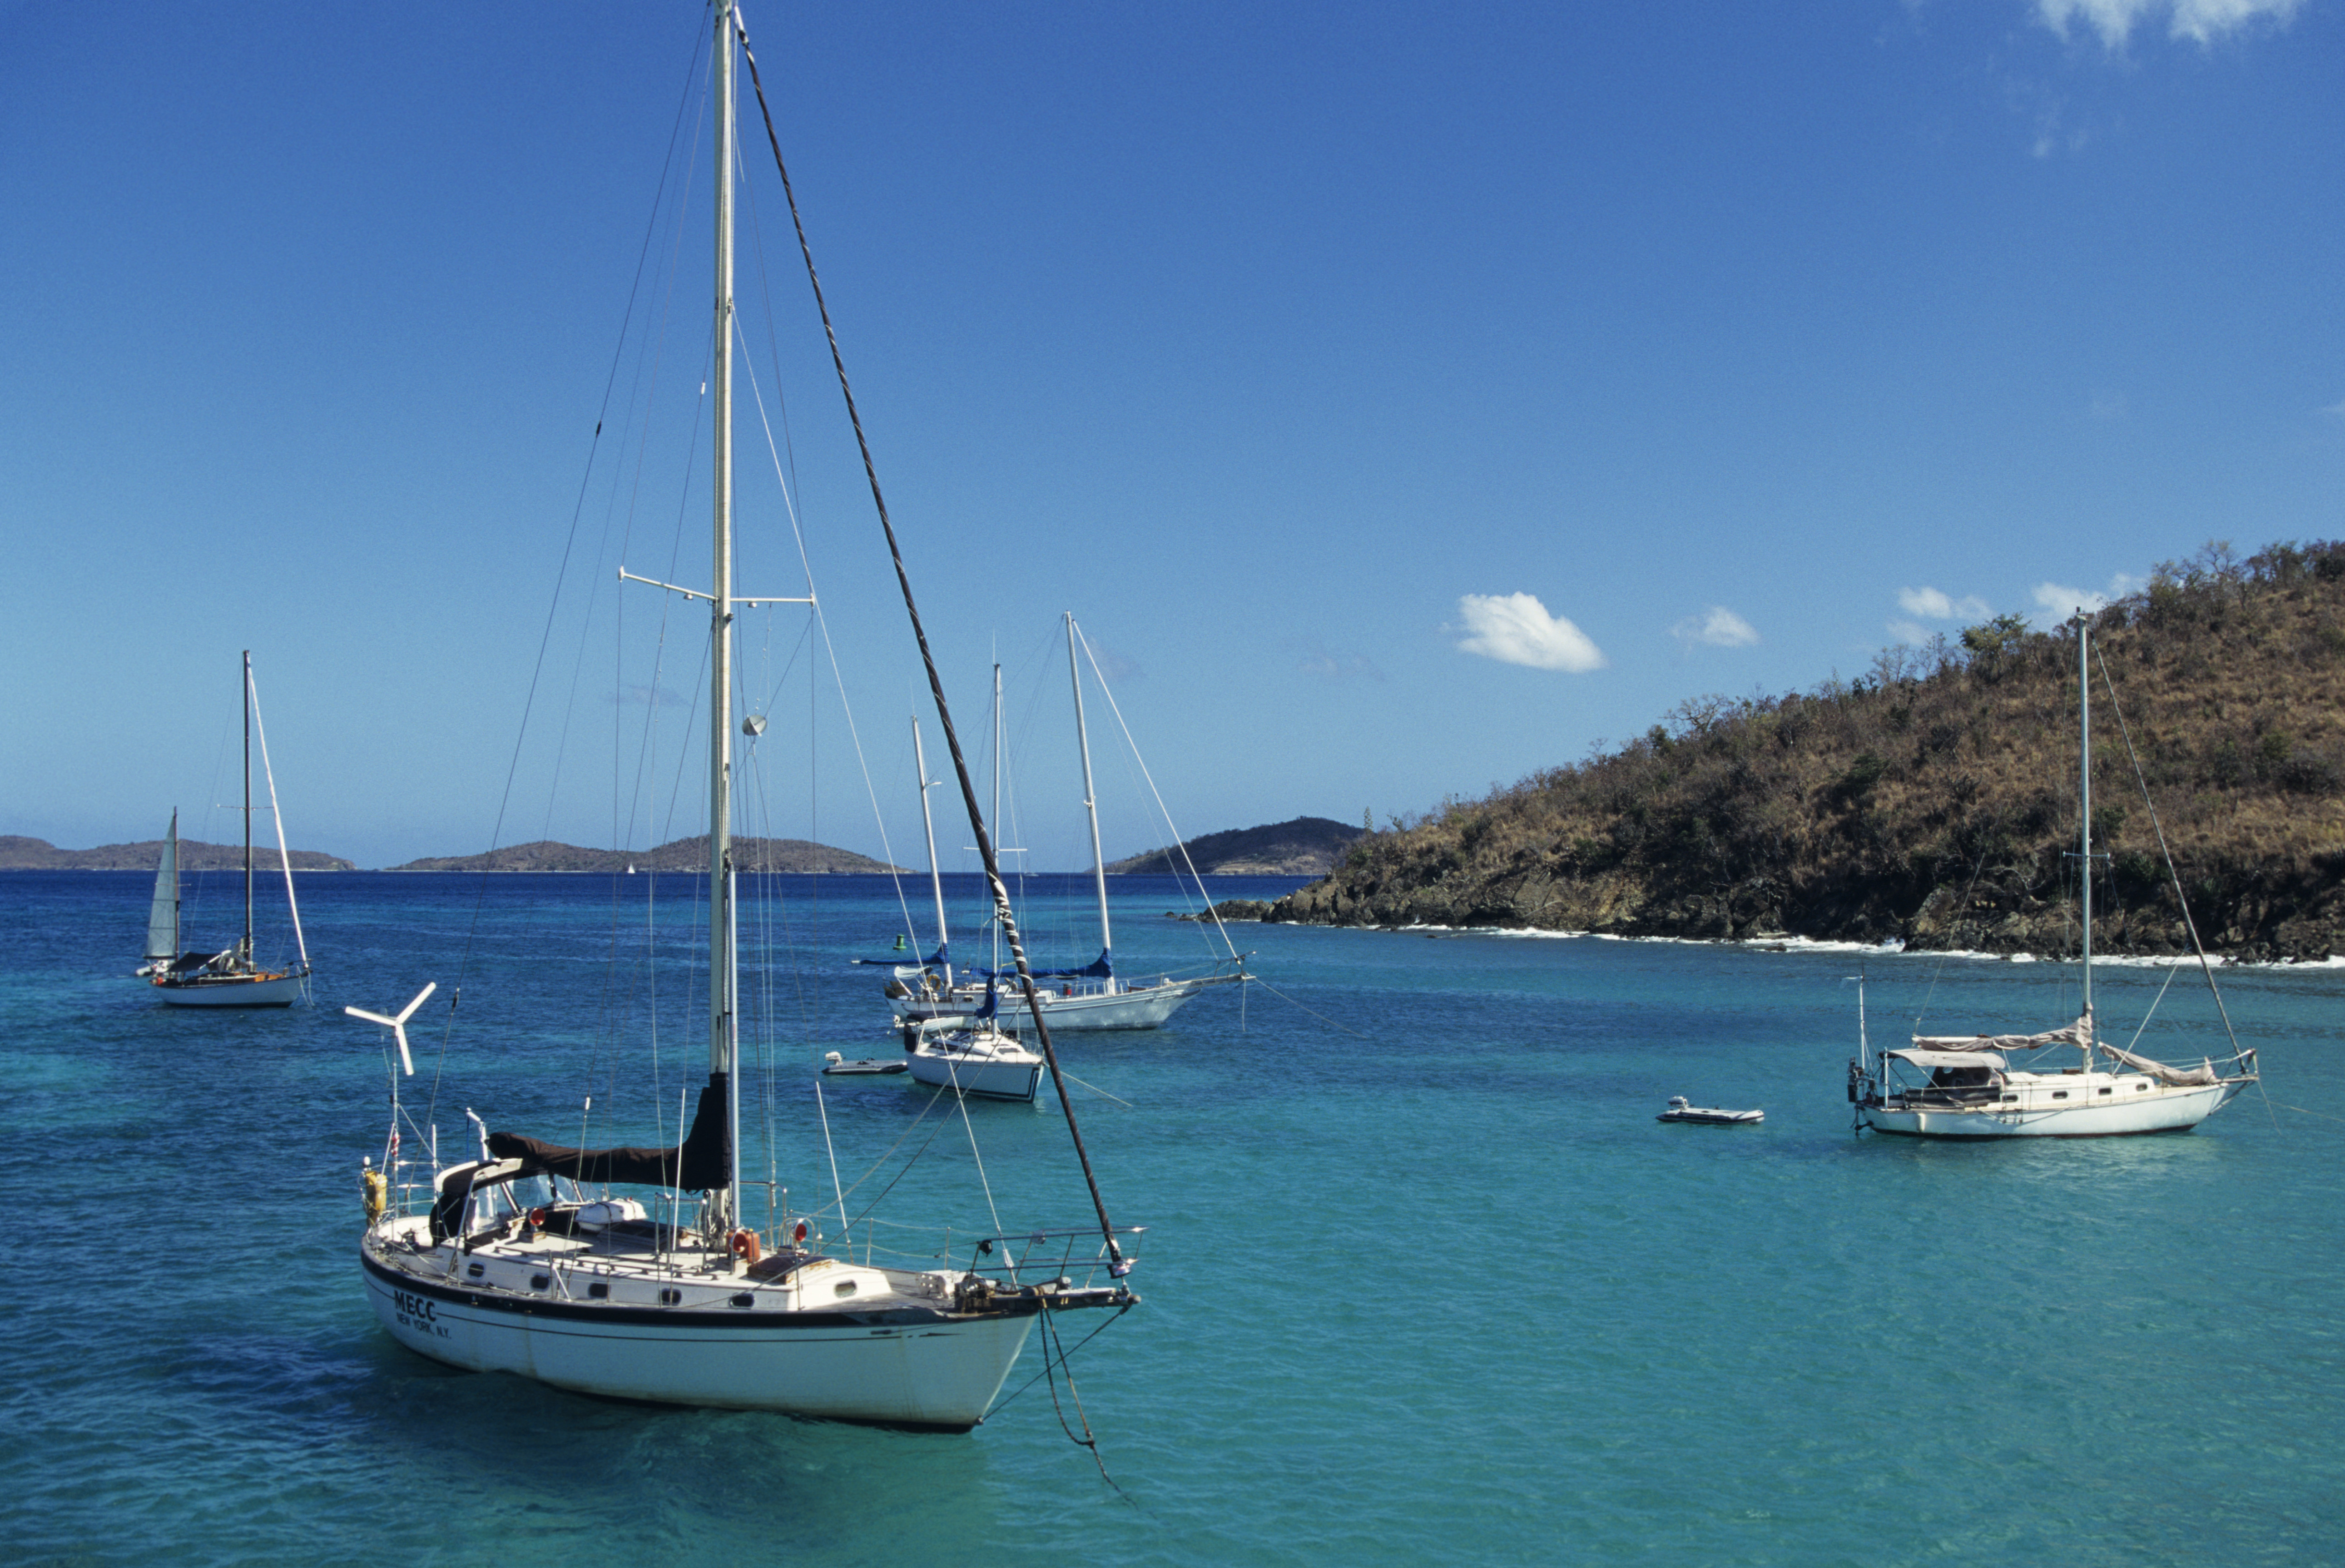 Boats moored at St. John, US Virgin Islands